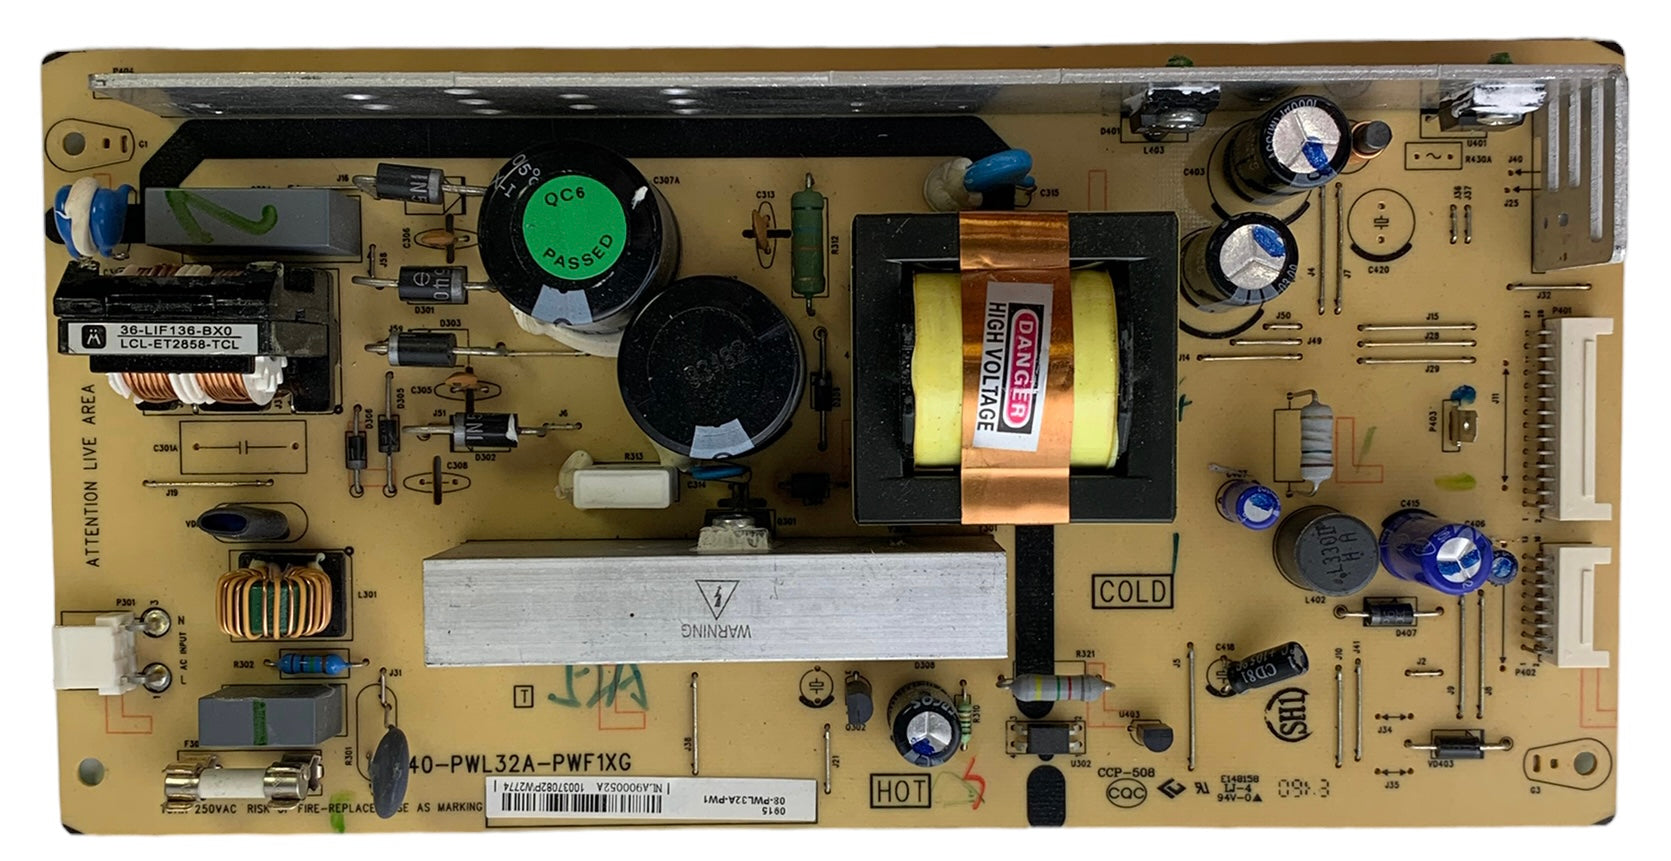 RCA 40-PWL32A-PWF1XG (40-PWL32A-PWF1XG) Power Supply Unit